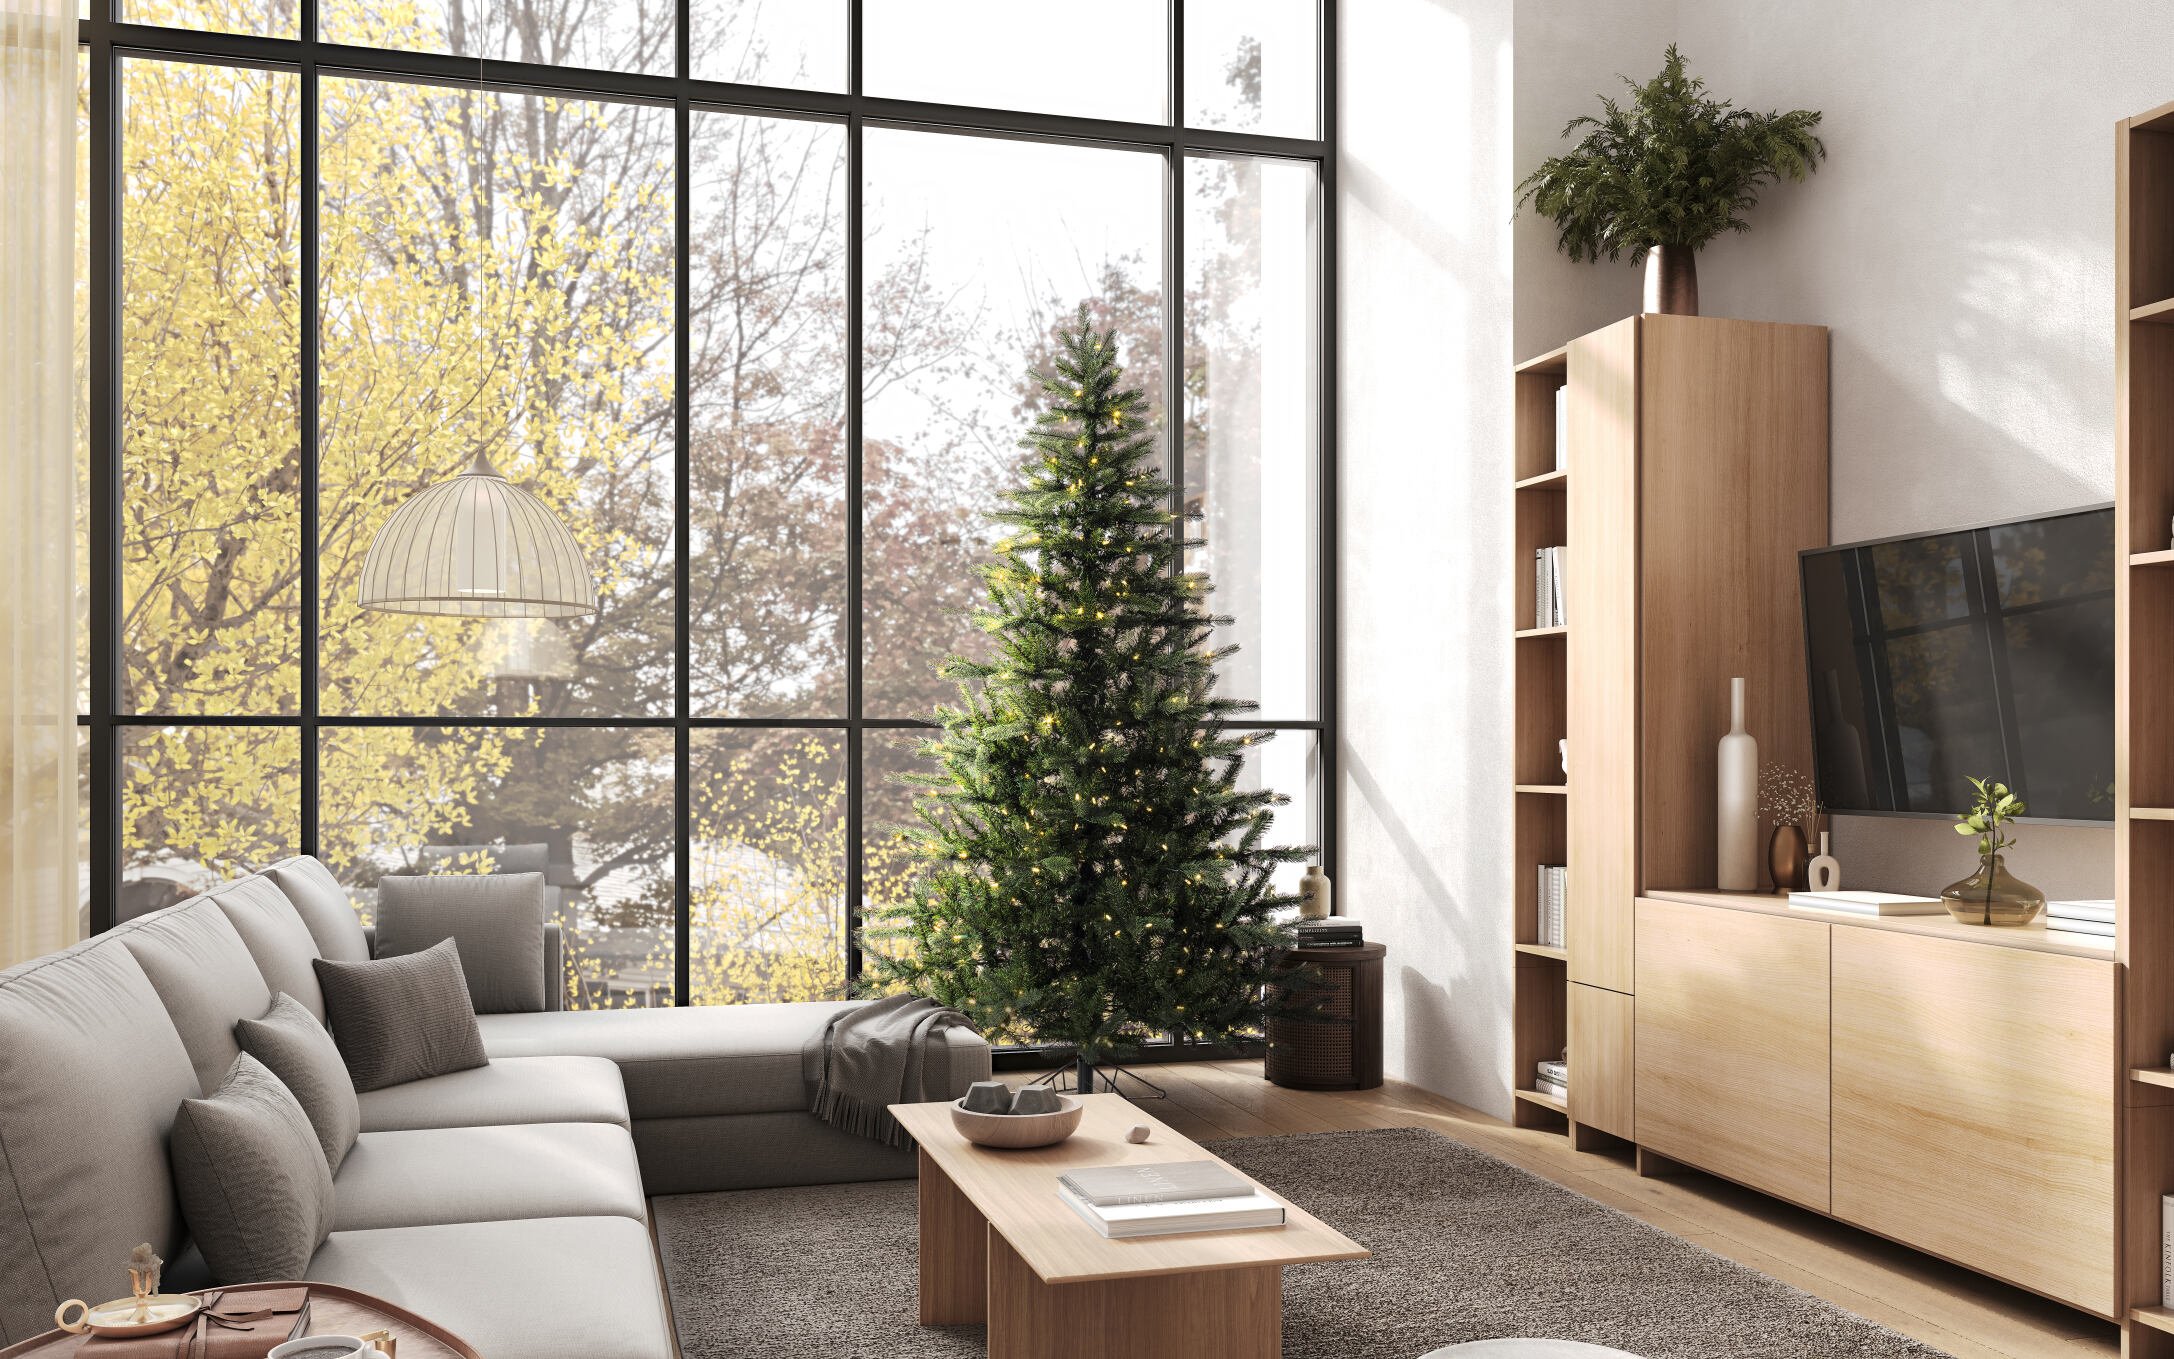 Artificial Itasca Vickerman tree in designer living room